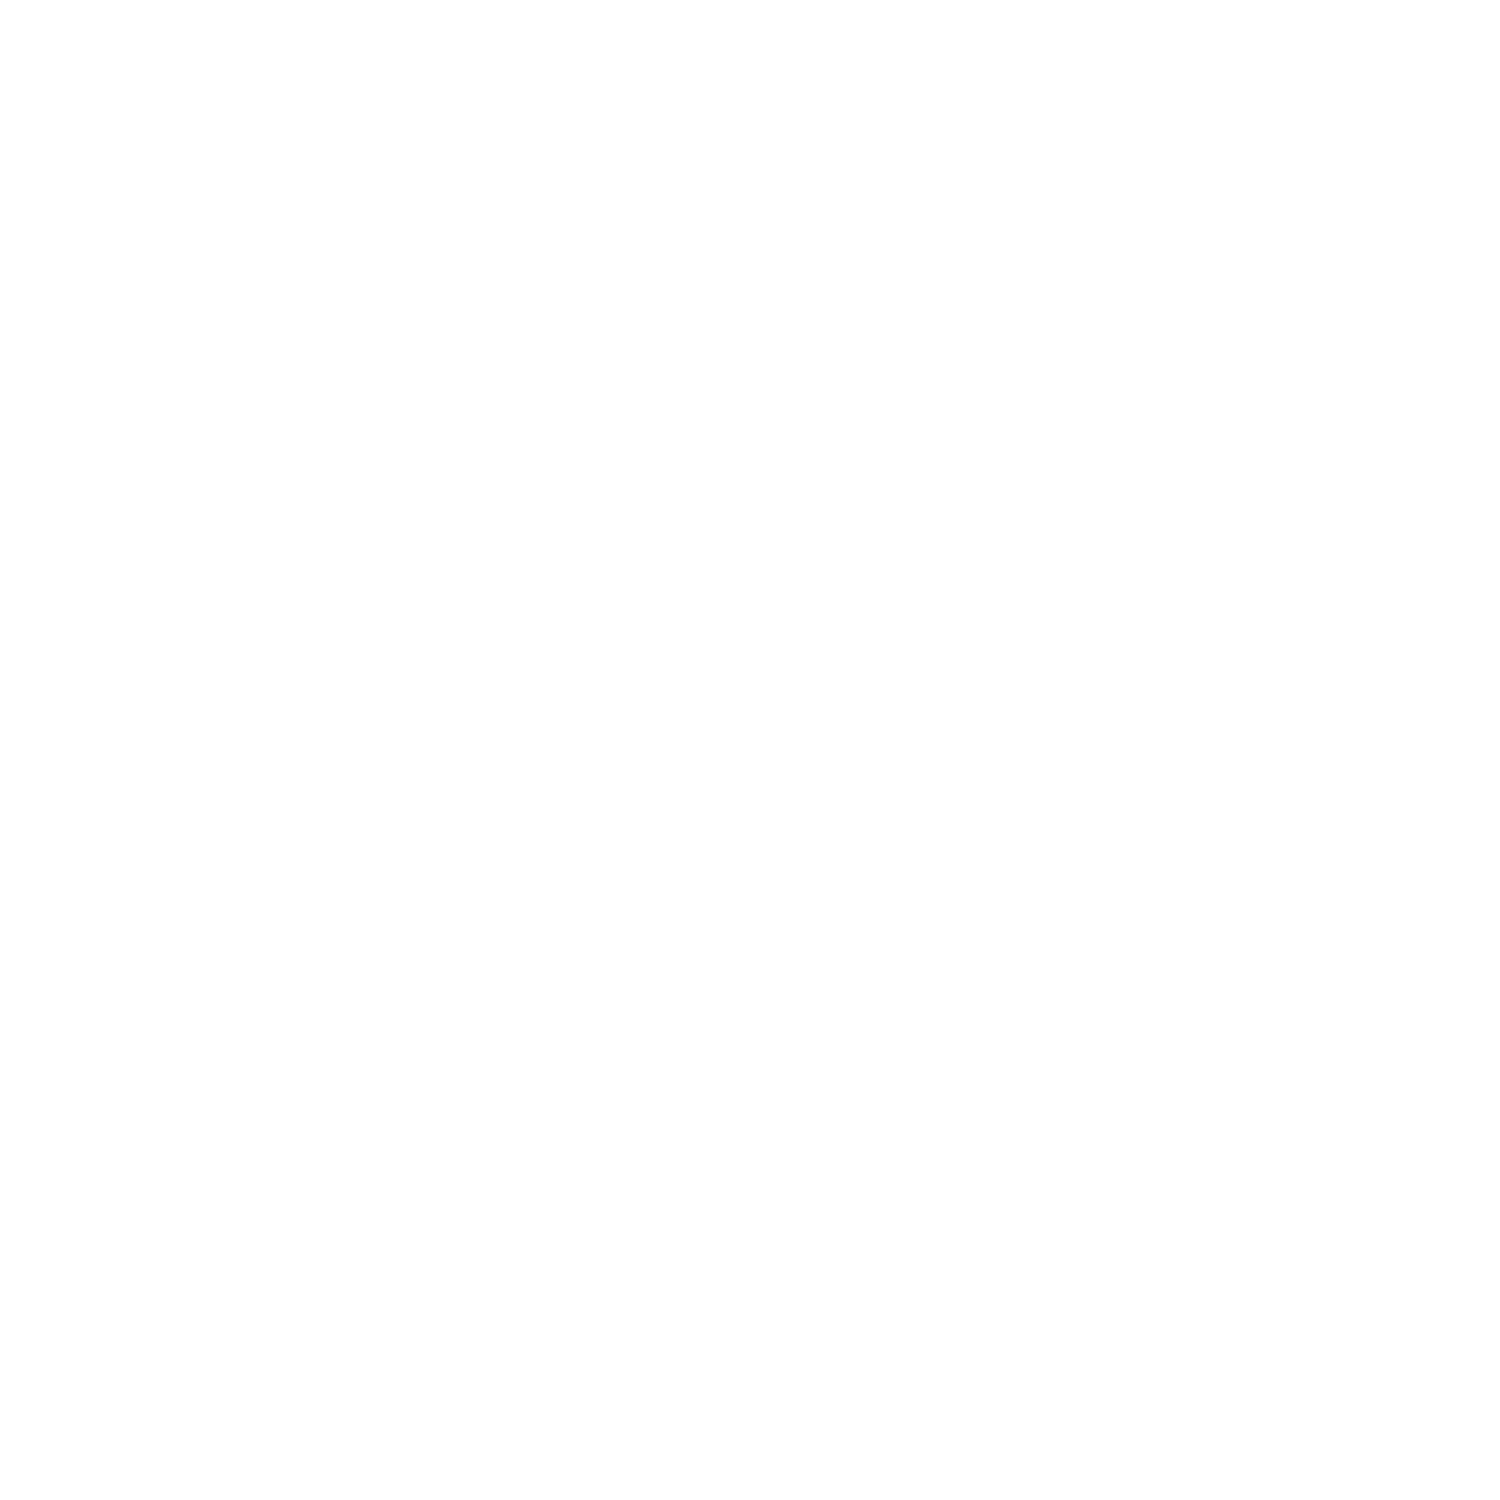 High Rise Cannabis Marketing Agency